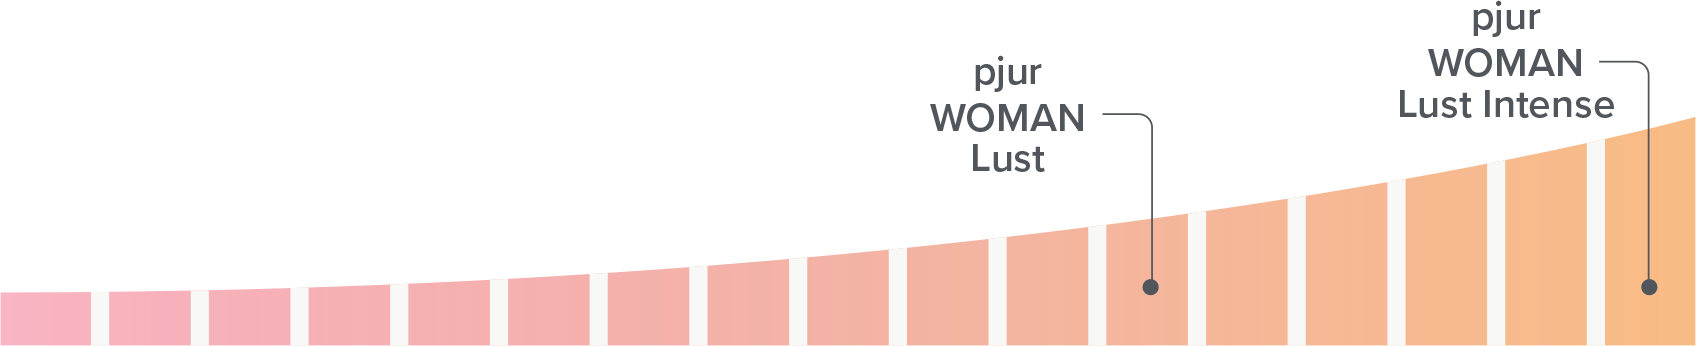 pjur-WOMAN-Lust_IntensityLevels